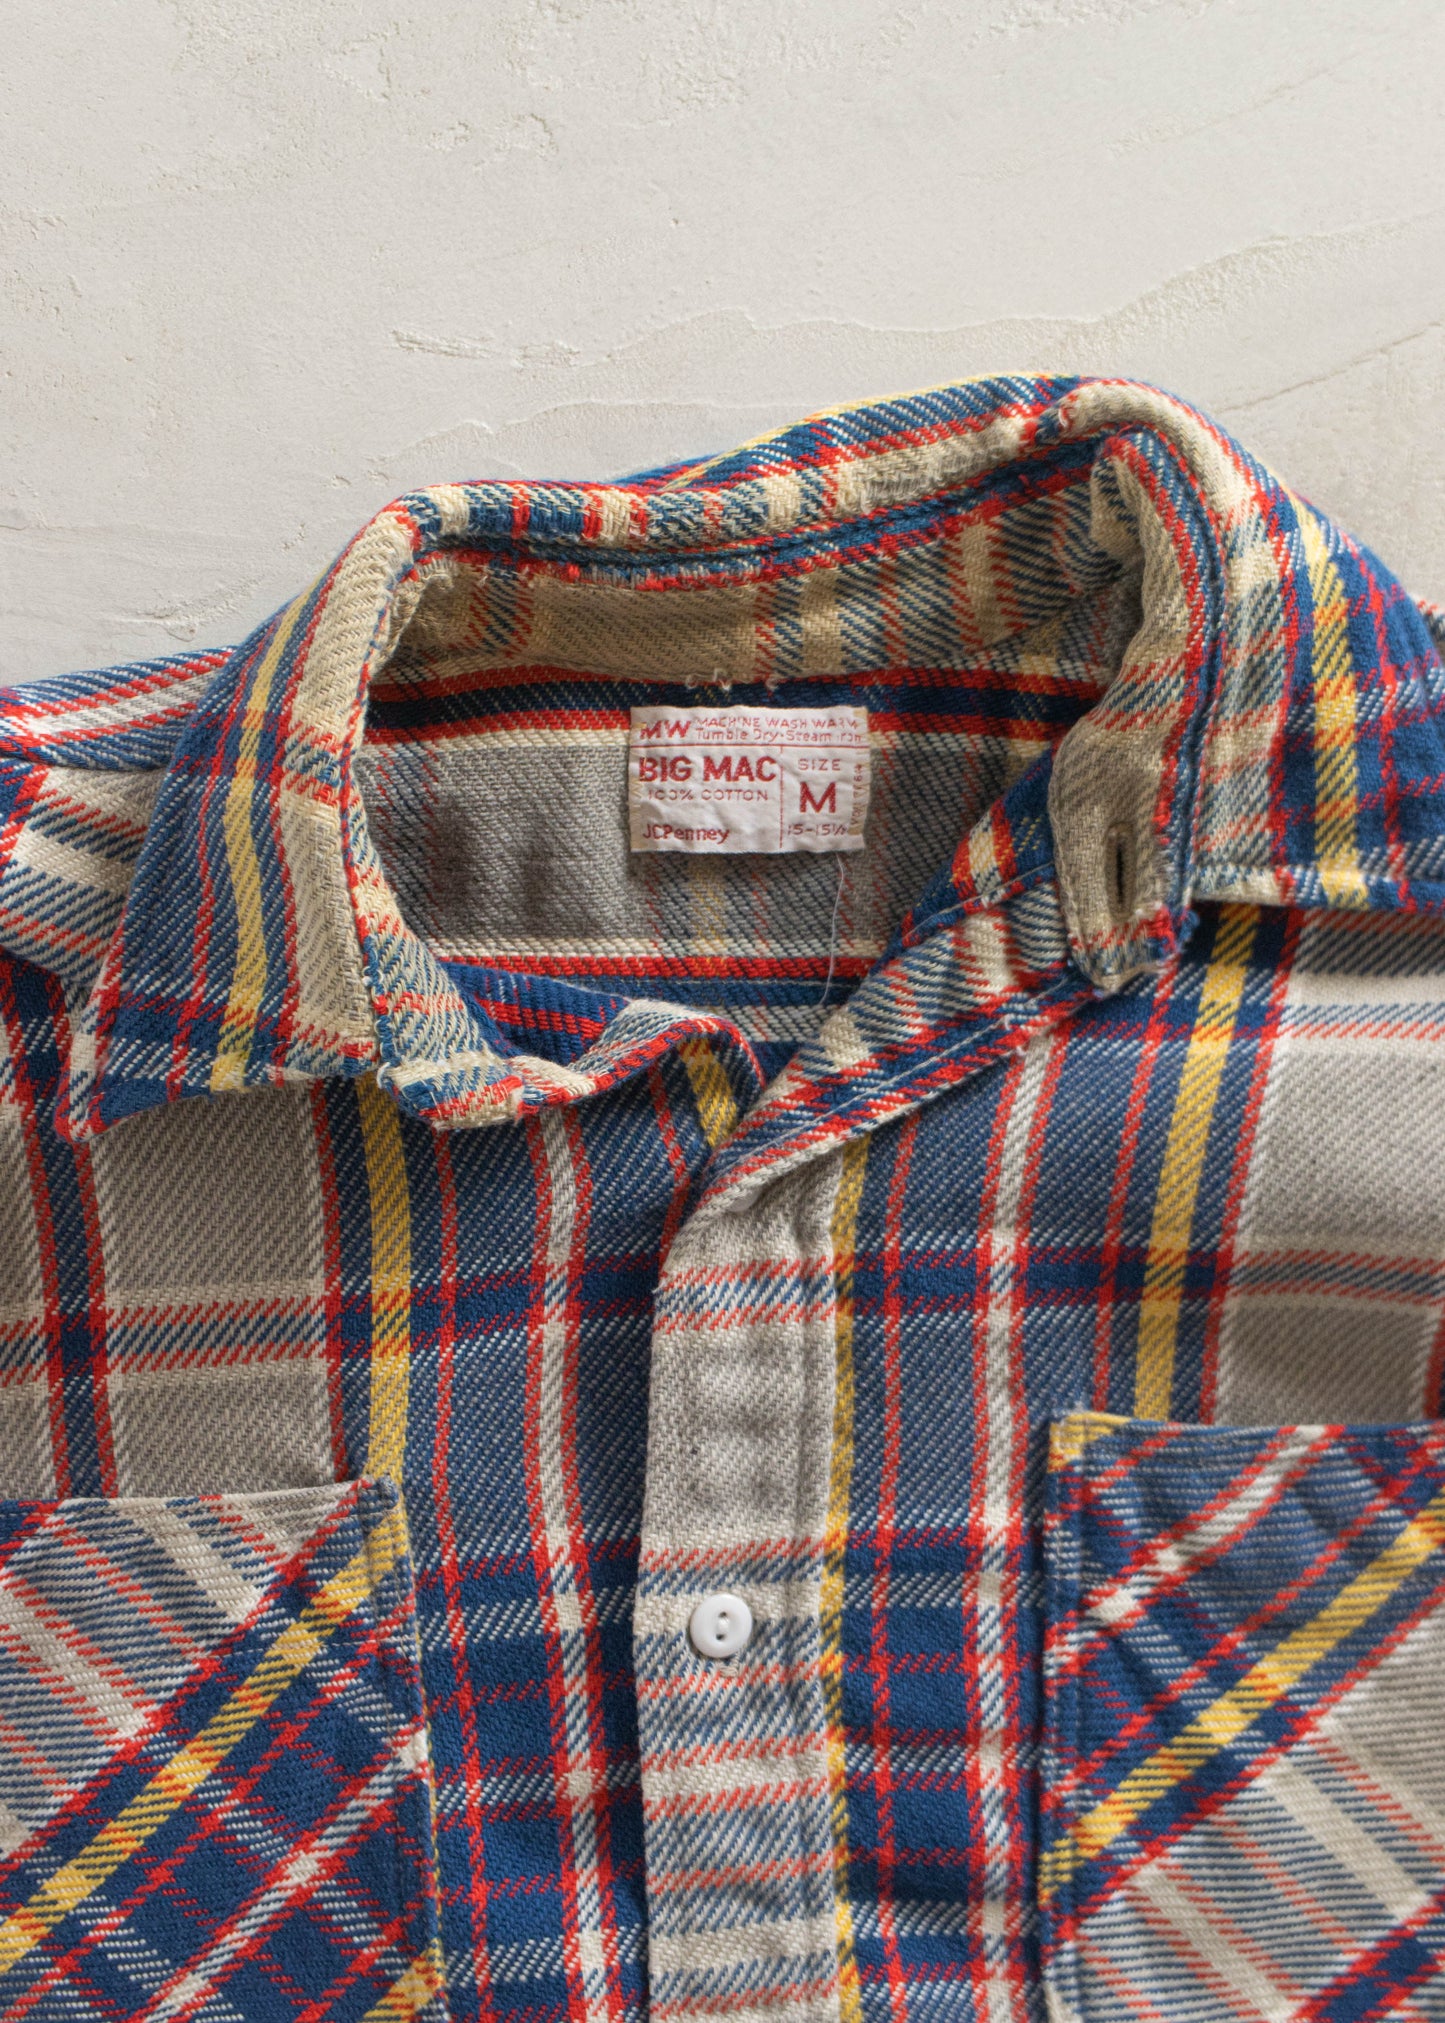 Vintage 1970s Big Mac by JC Penney Cotton Flannel Button Up Shirt Size M/L